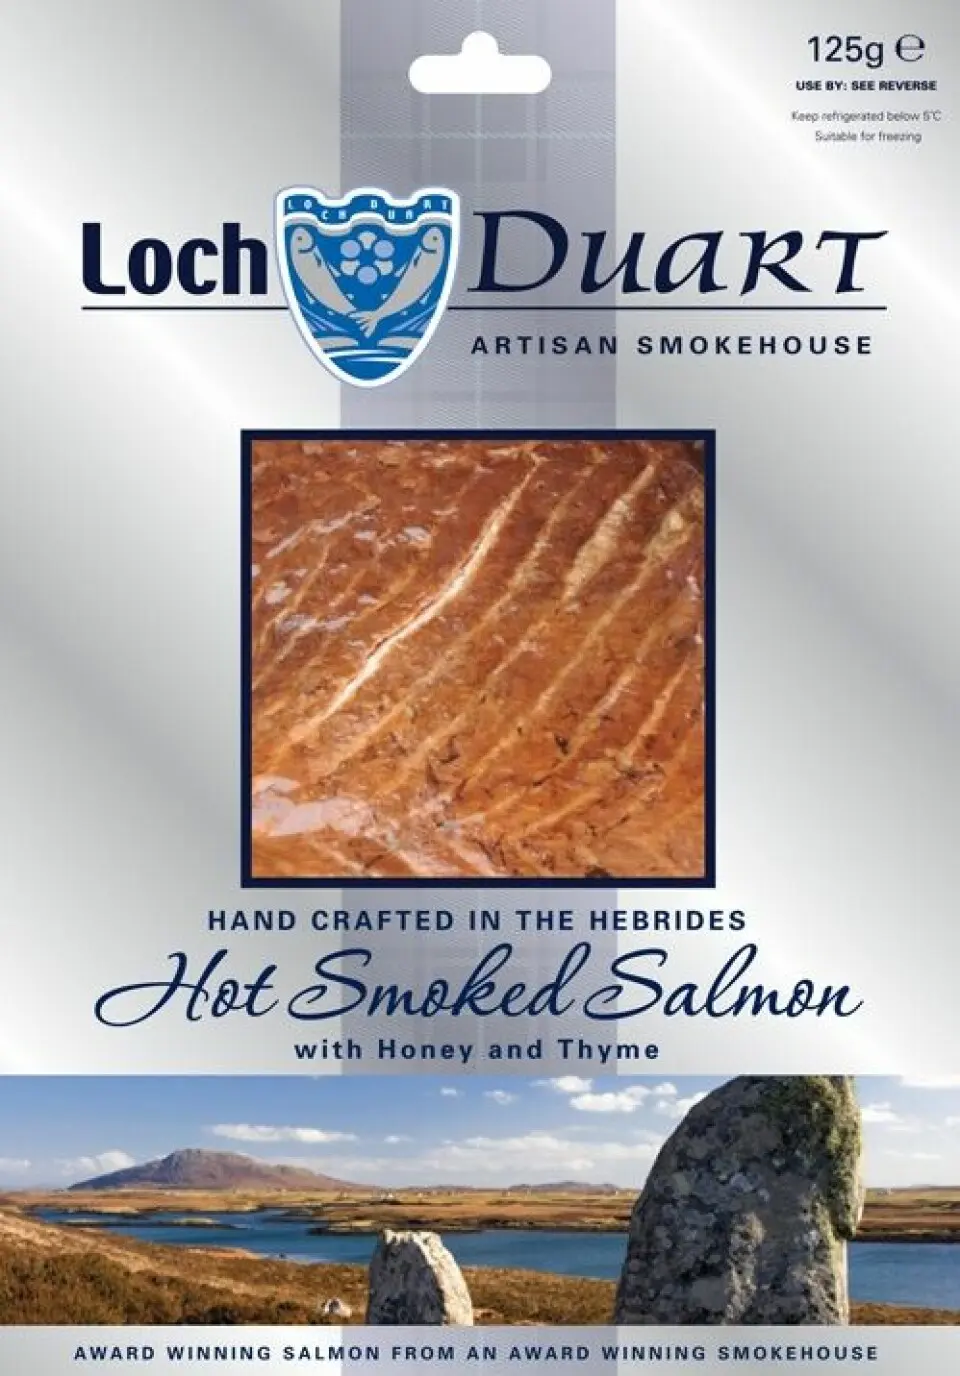 loch duart artisan smokehouse - Is Scottish farmed salmon safe to eat